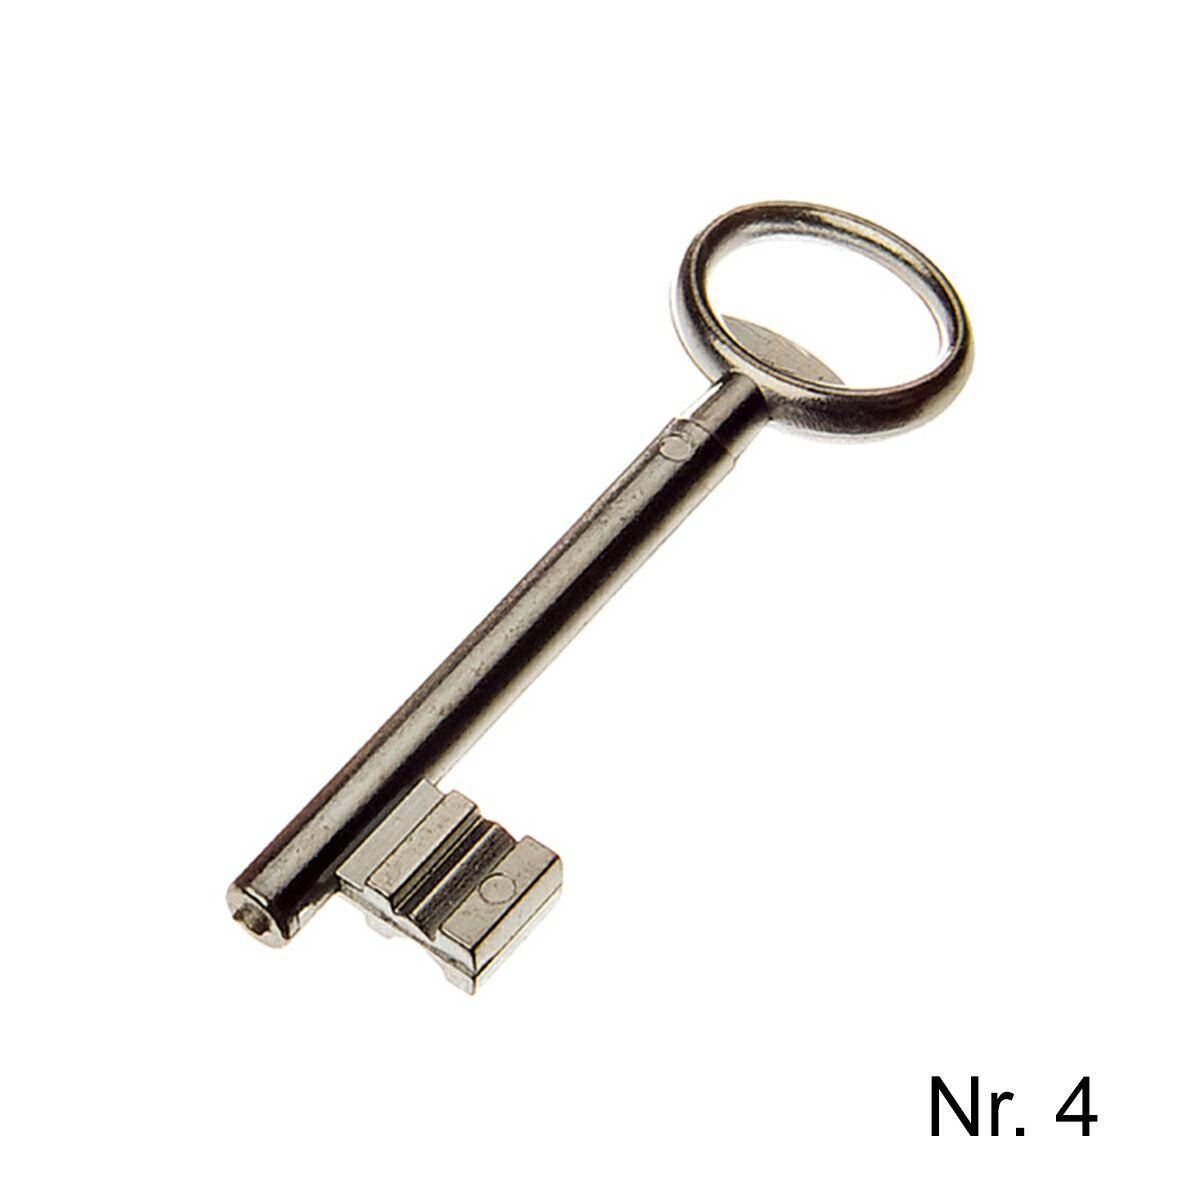 Cast key Jania for the lock - No. 4